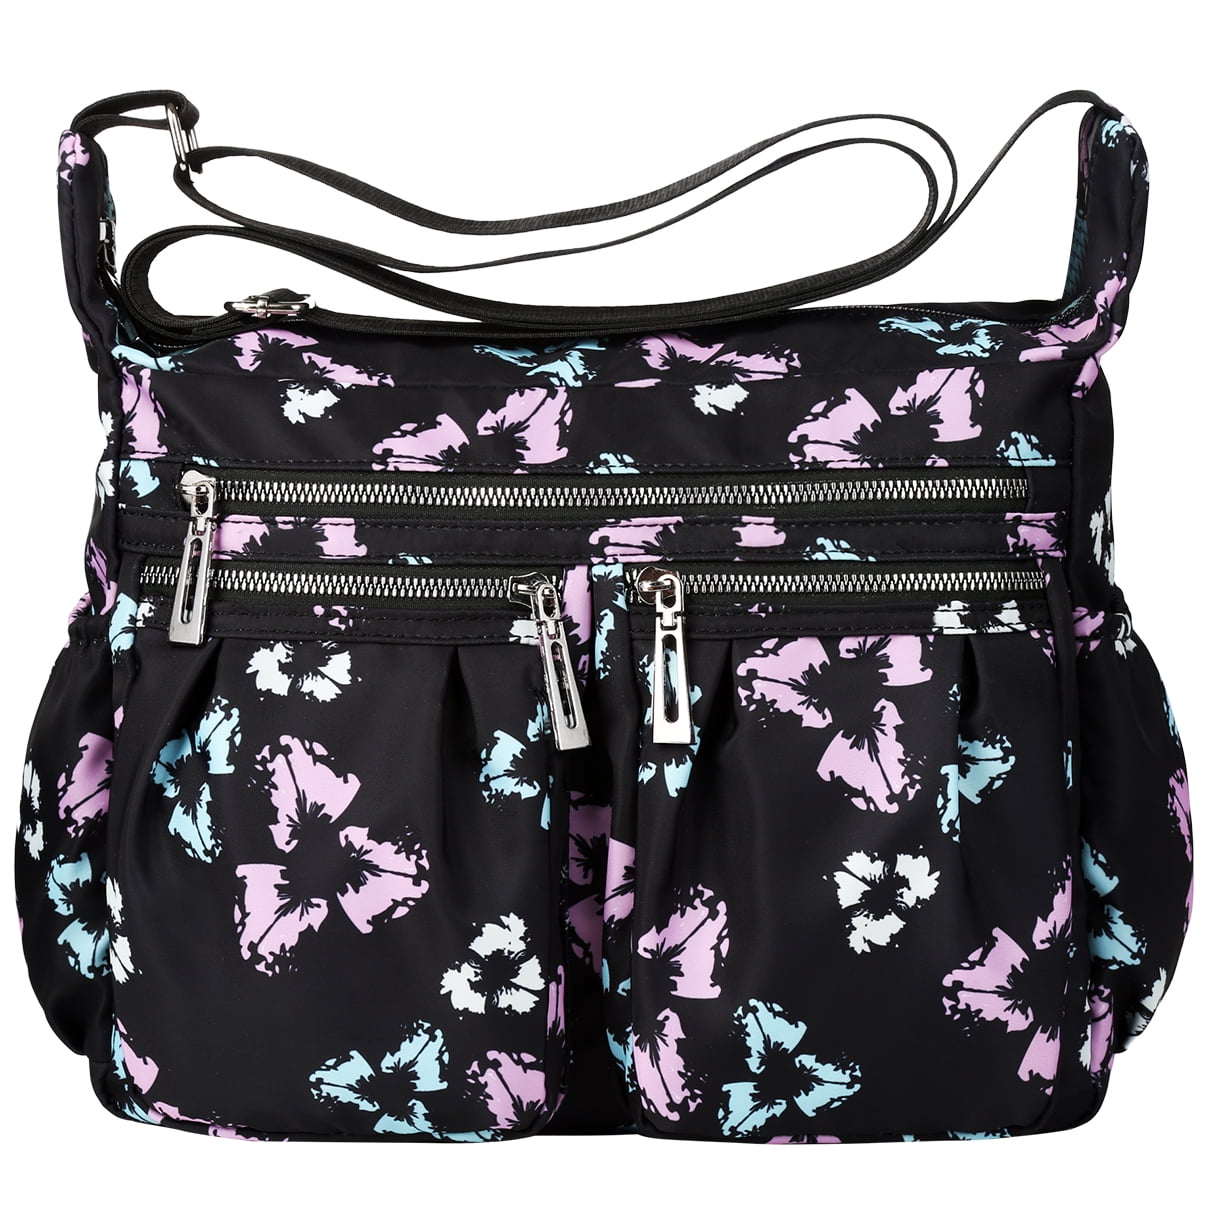 Women Cross-body Bag Classic Travel Shoulder Bag Trendy Messenger Bag Large-capacity Nylon Multi Zipper Bags